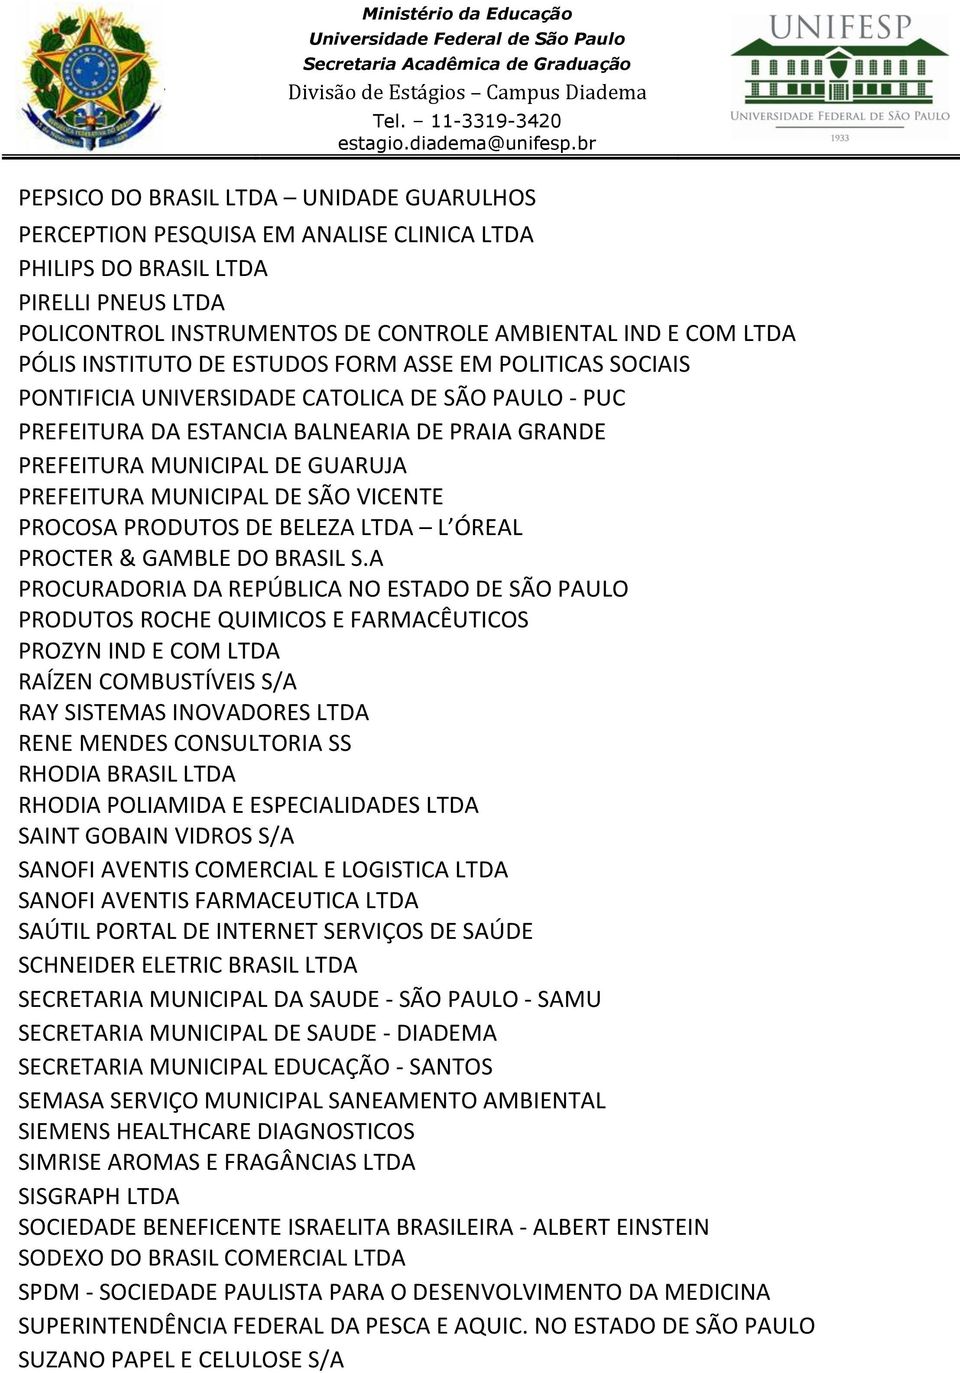 MUNICIPAL DE SÃO VICENTE PROCOSA PRODUTOS DE BELEZA LTDA L ÓREAL PROCTER & GAMBLE DO BRASIL S.